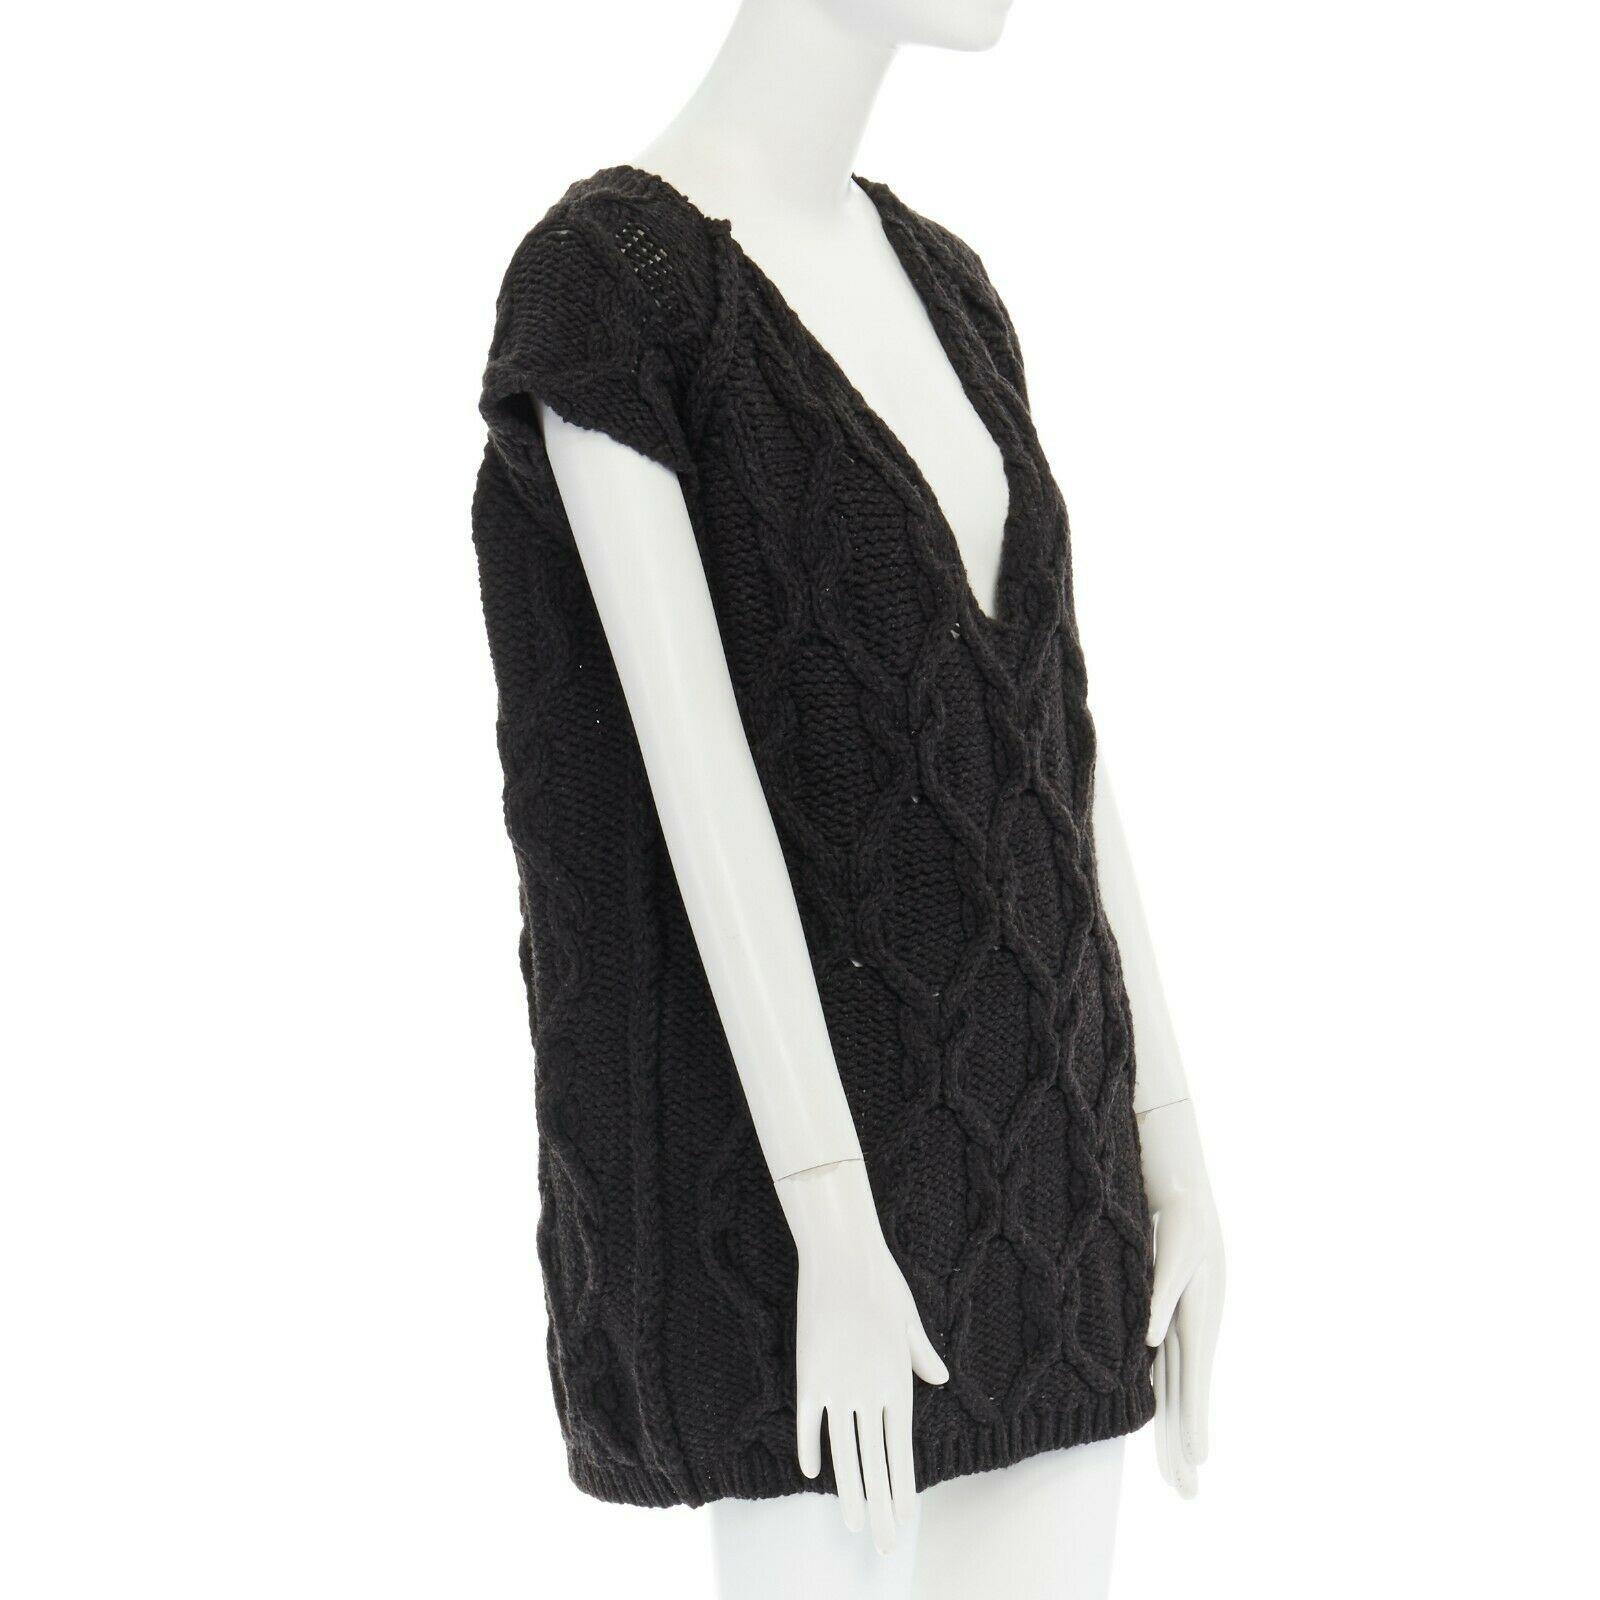 CHLOE dark grey merino wool yack blend V-neck grid chunky knit vest sweater S
CHLOE
Merino wool, yack. 
Dark grey/brown. 
V-neck. 
Grid-like chunky knit. 
Sleeveless sweater. 
Boxy fit. 
Sweater top. 
Made in Italy.

CONDITION:
Very good, this item